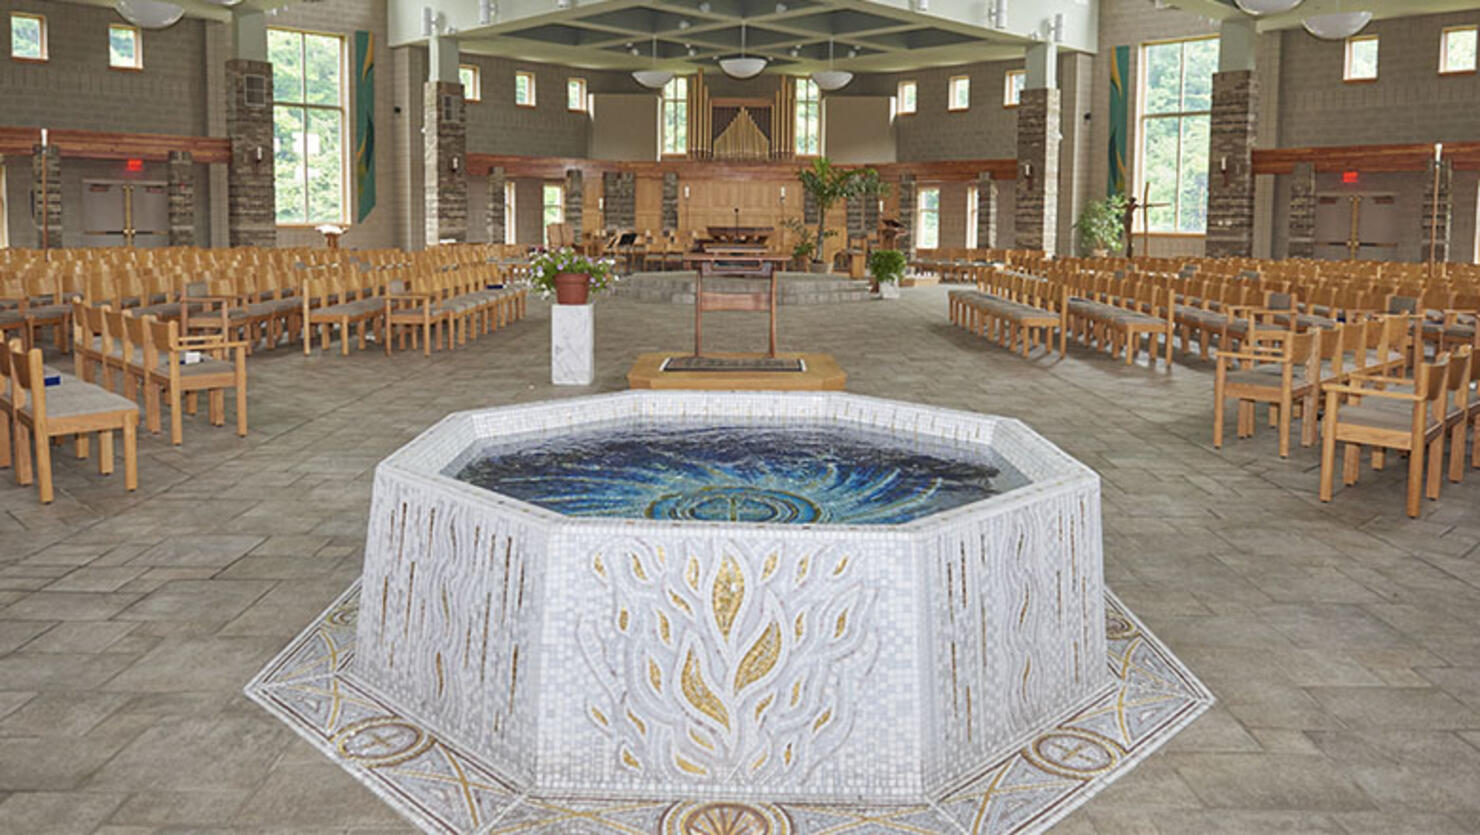 Catholic Church baptismal font